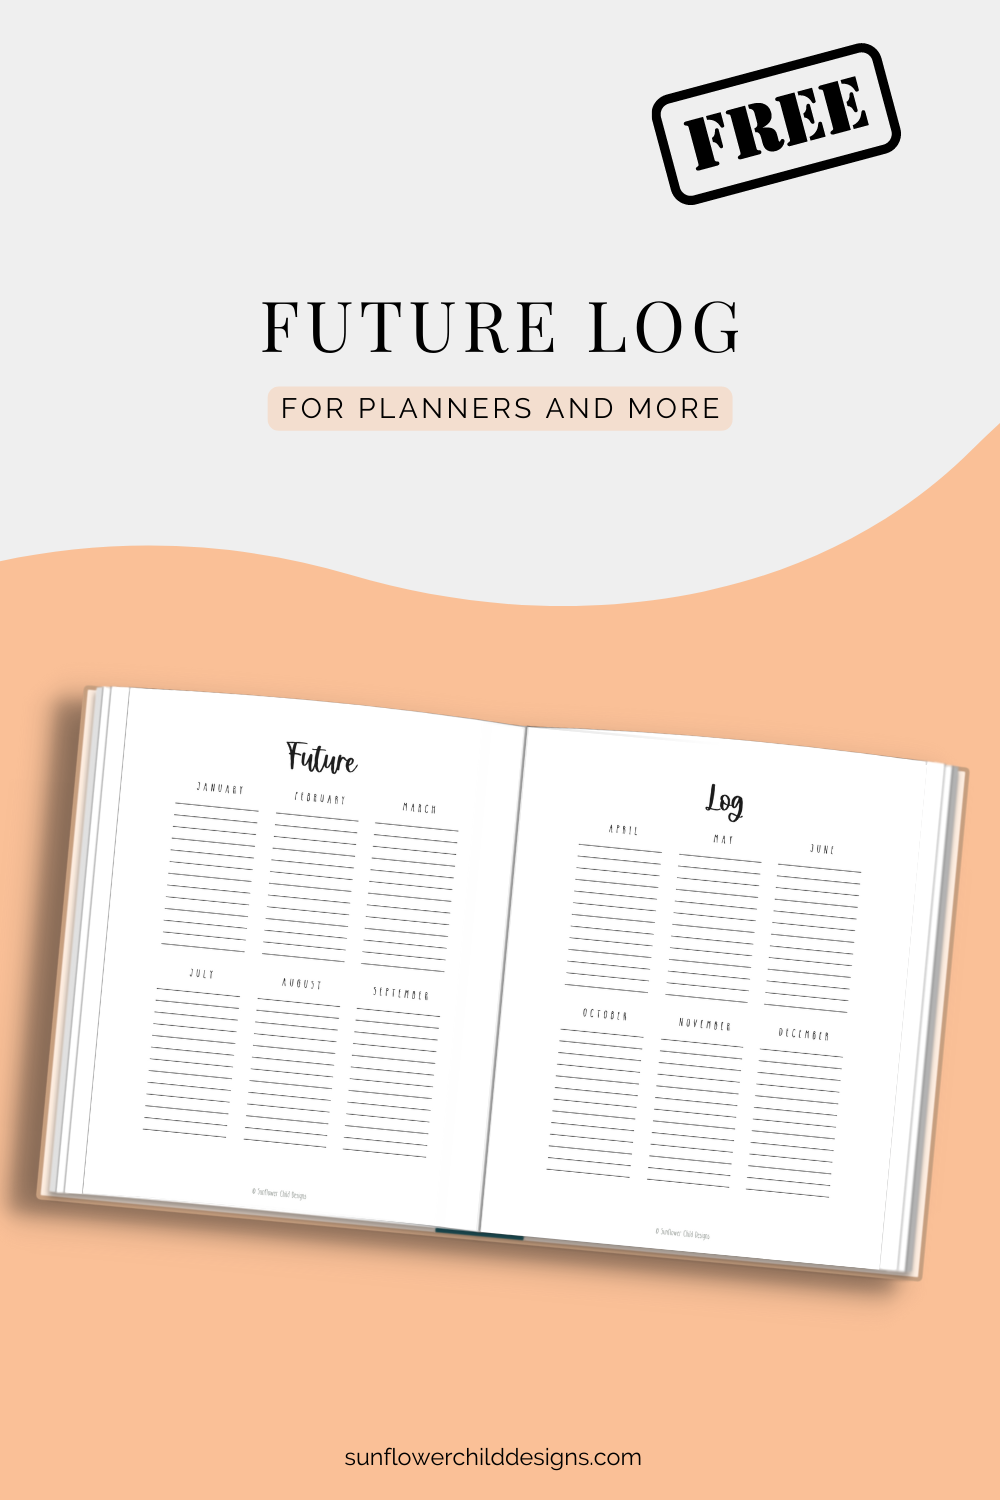 FREE Future Log - Free Planner Printables